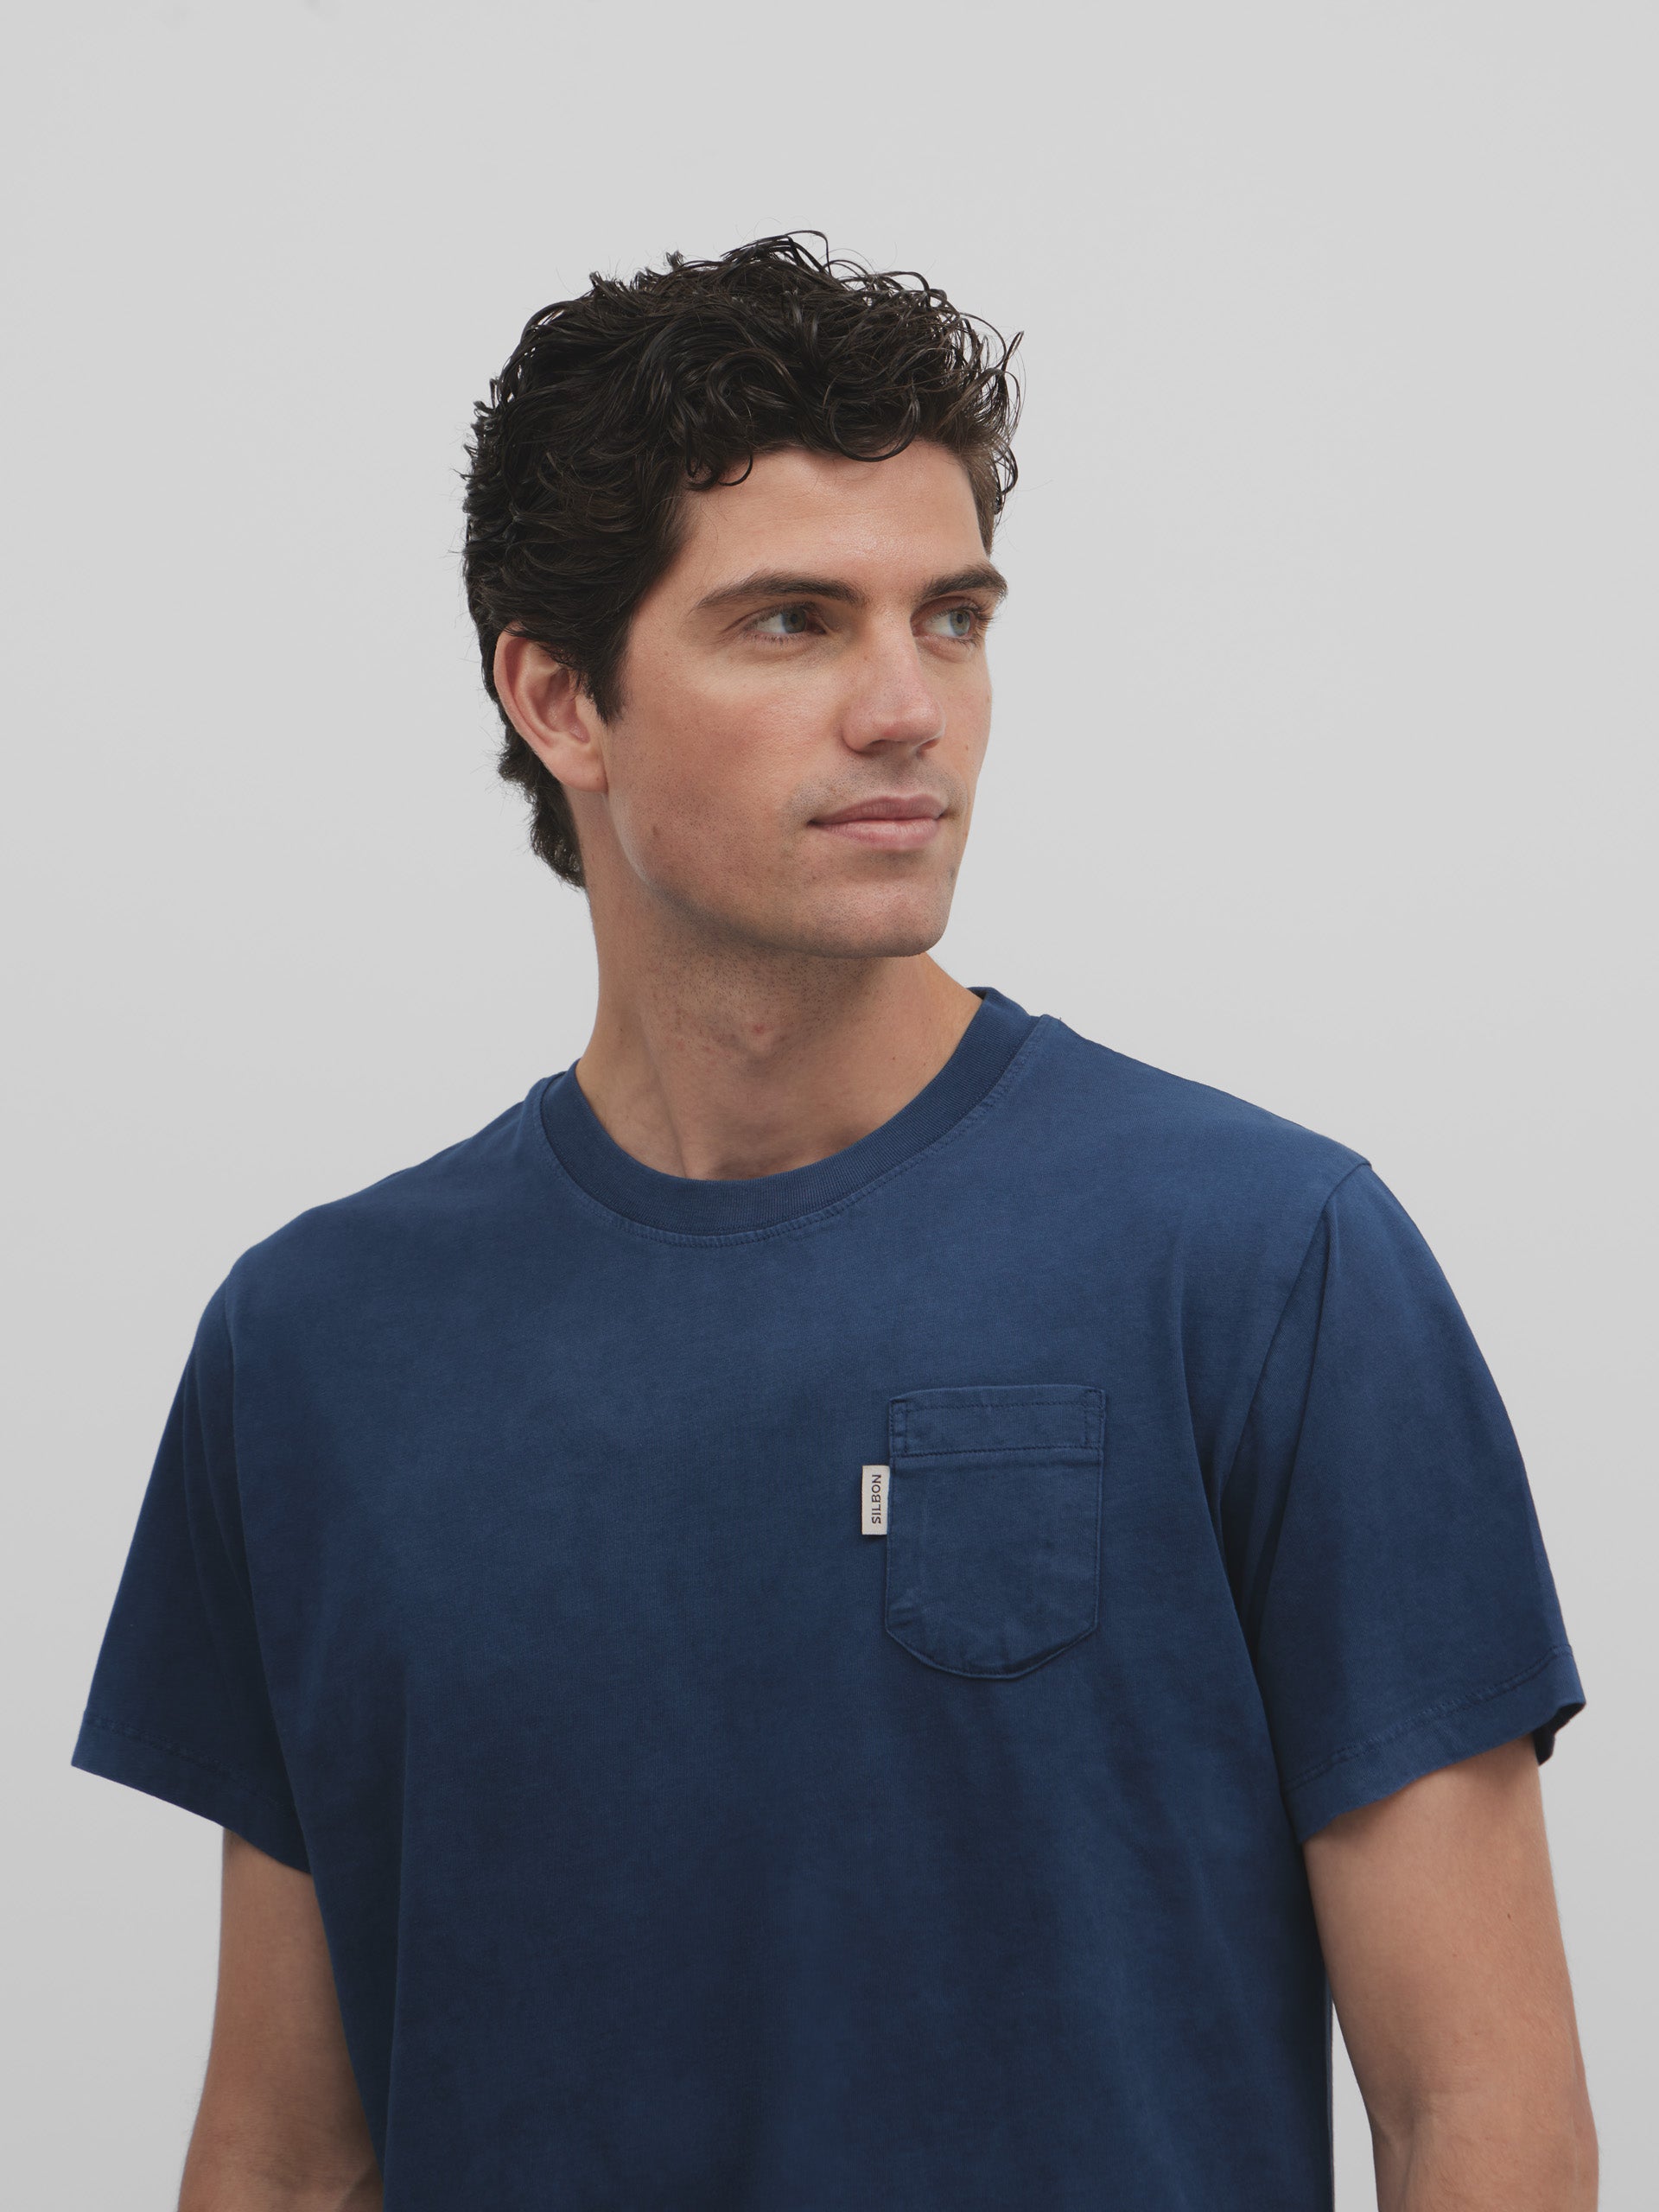 Plain Silbon T-shirt with blue pocket